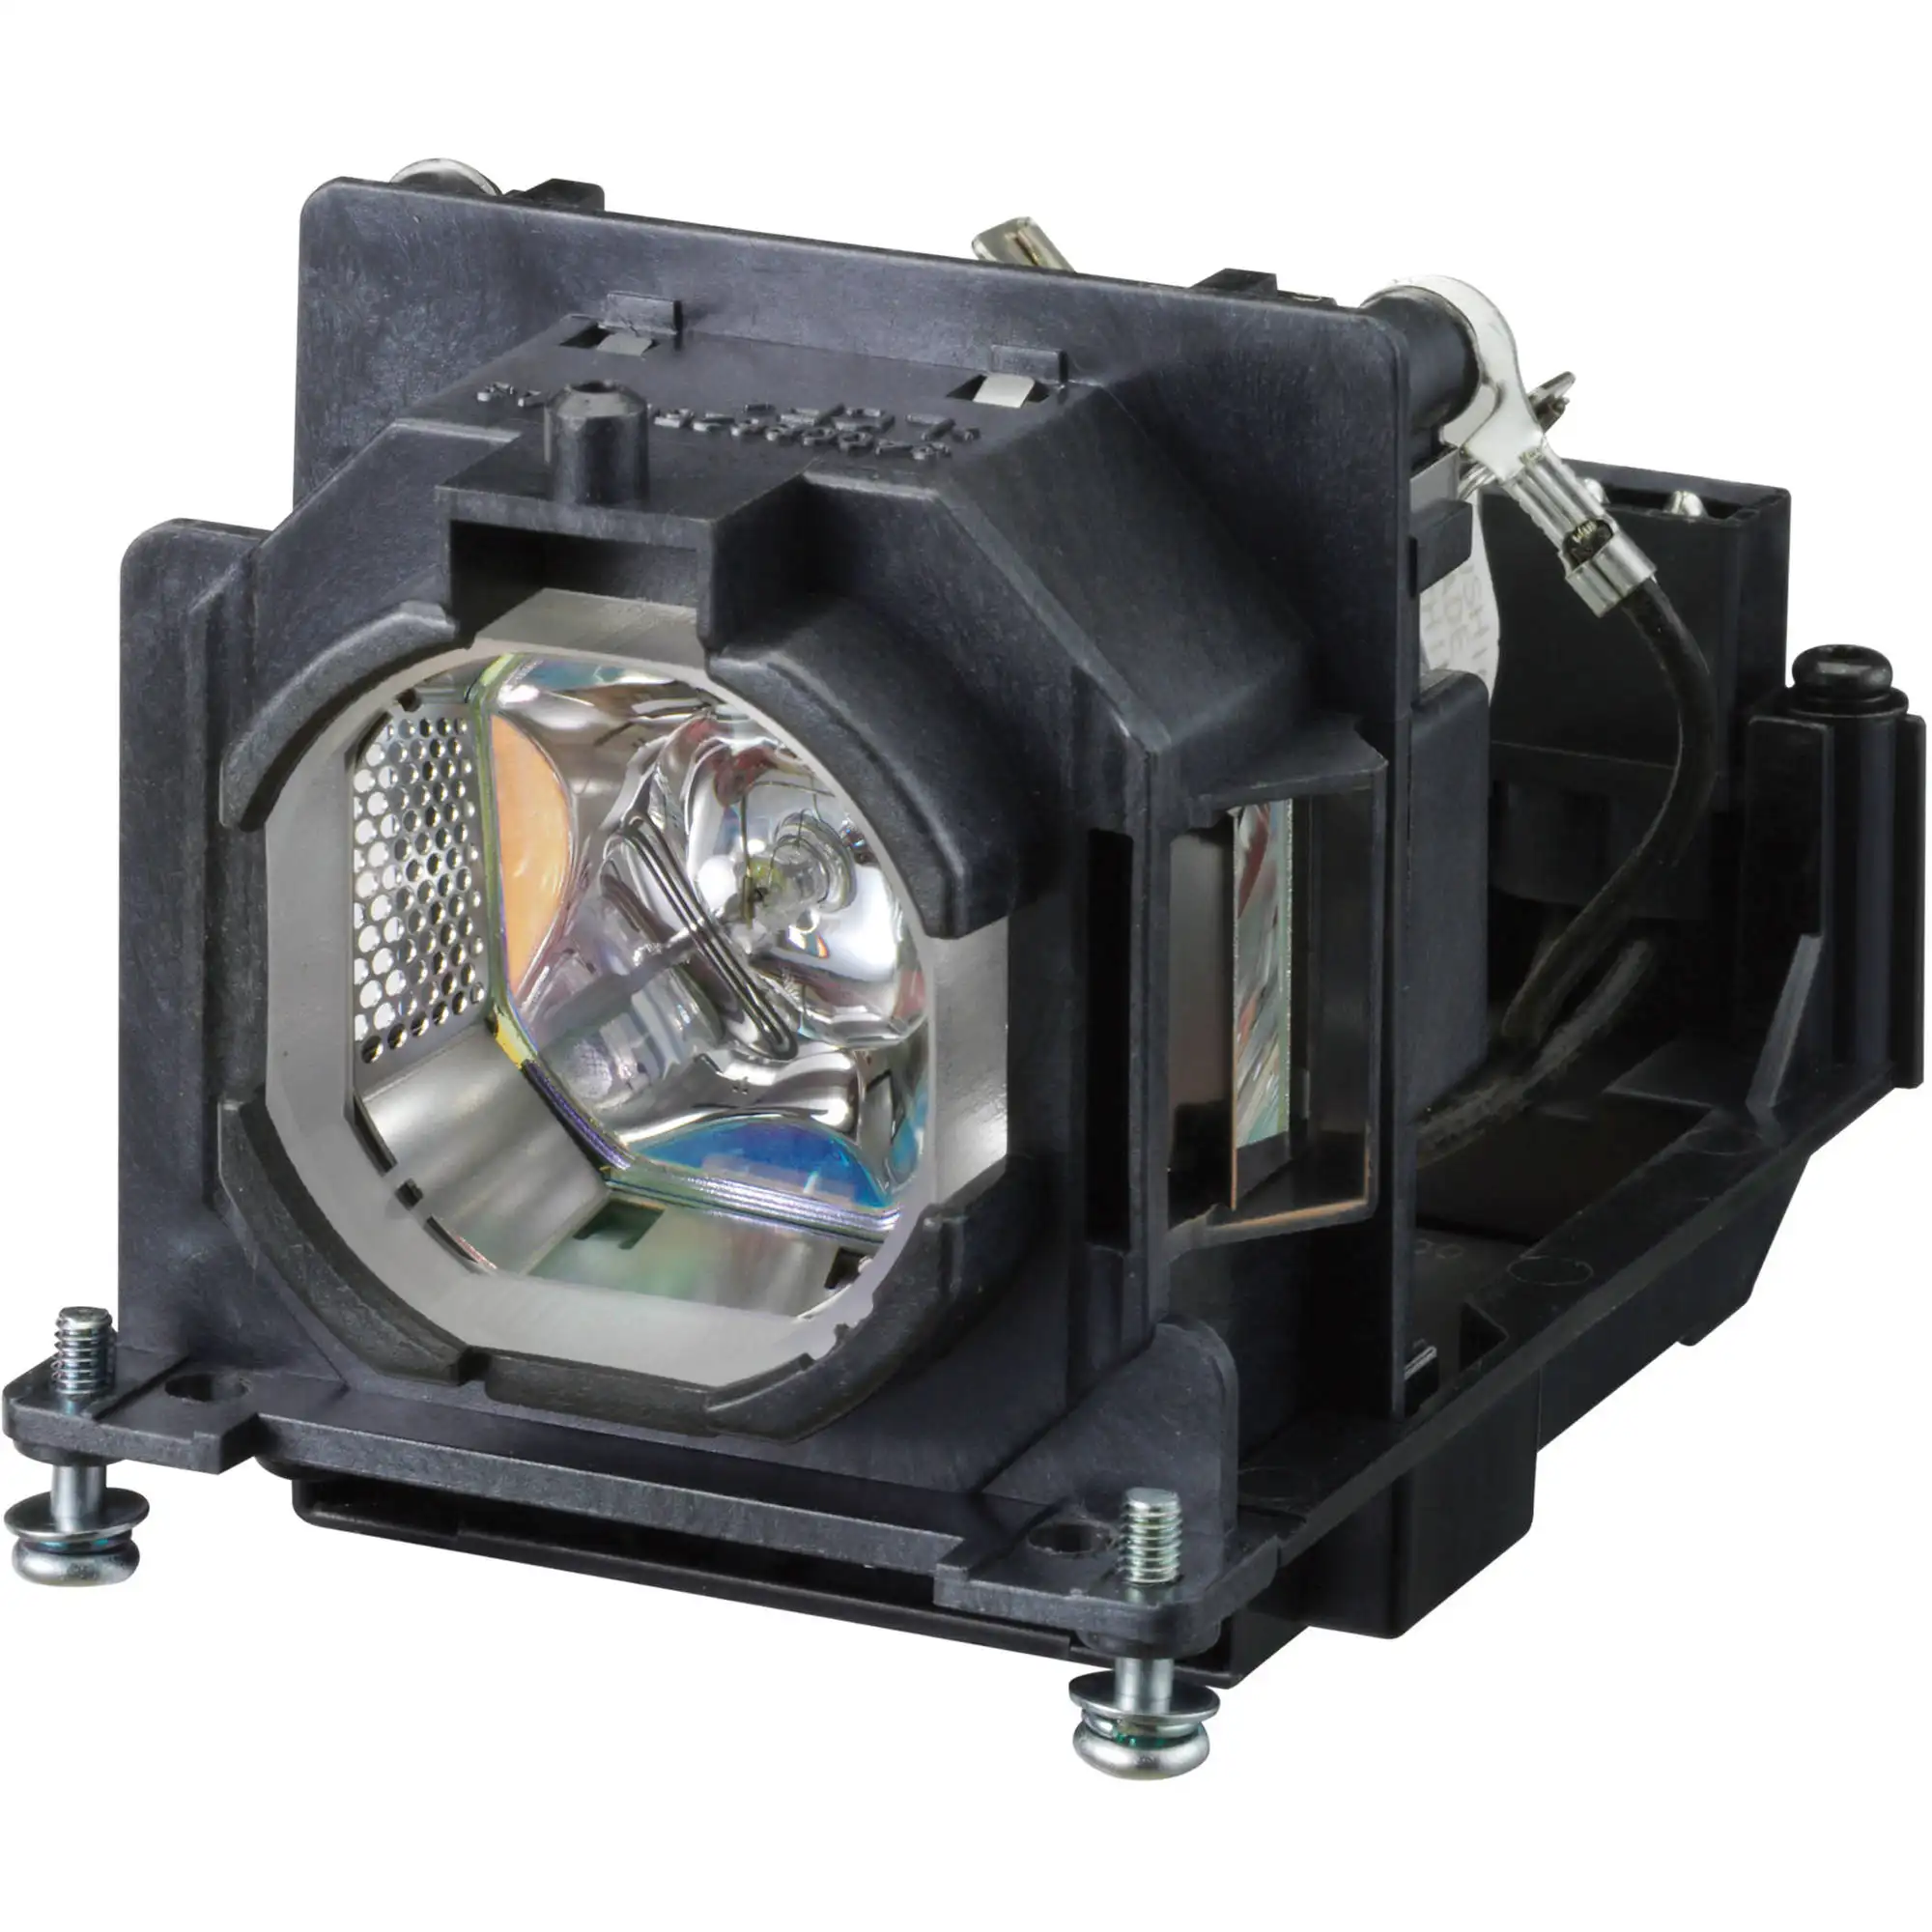 Orijinal panasonic lambaları konut NSHA230W ET-LAL500 Panasonic projektör için PT-LW330 PT-LB280 PT-LB280U PT-LB300 PT-LB300U